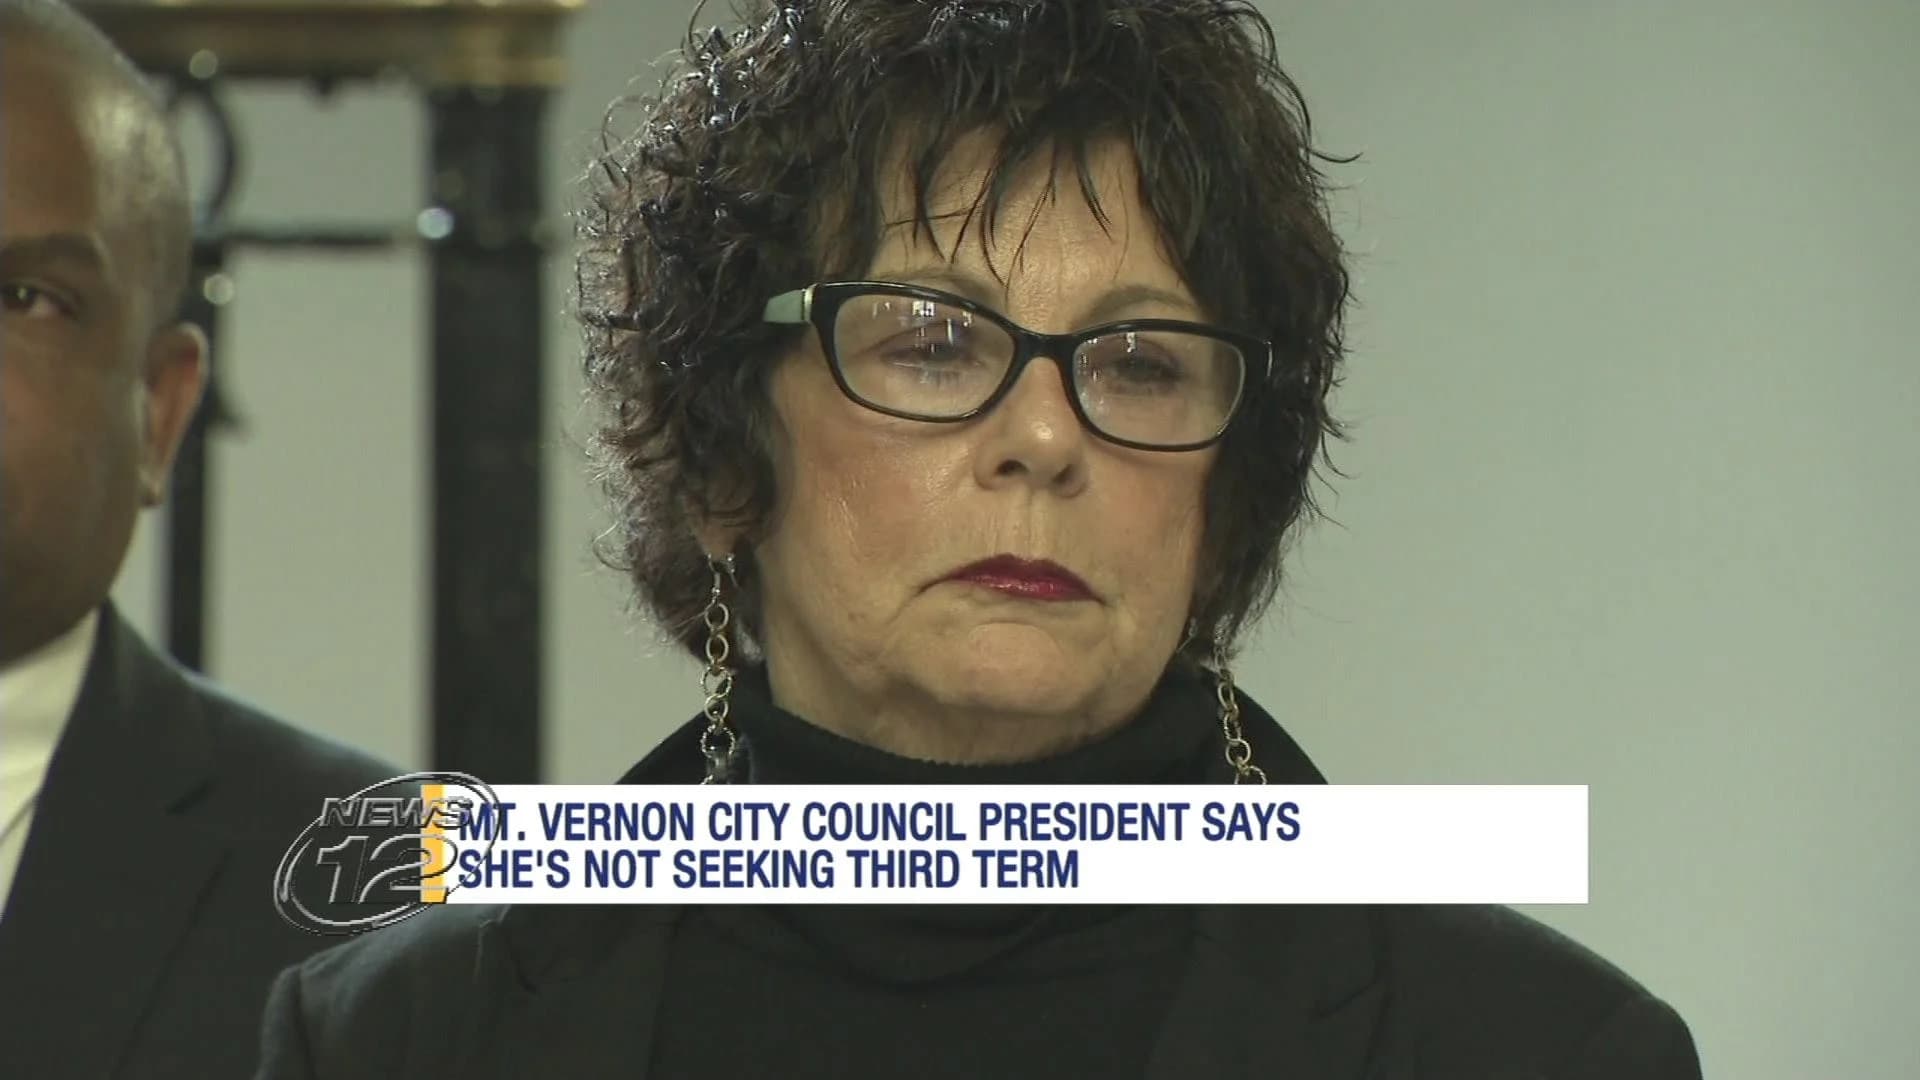 Mount Vernon City Council president won't seek 3rd term